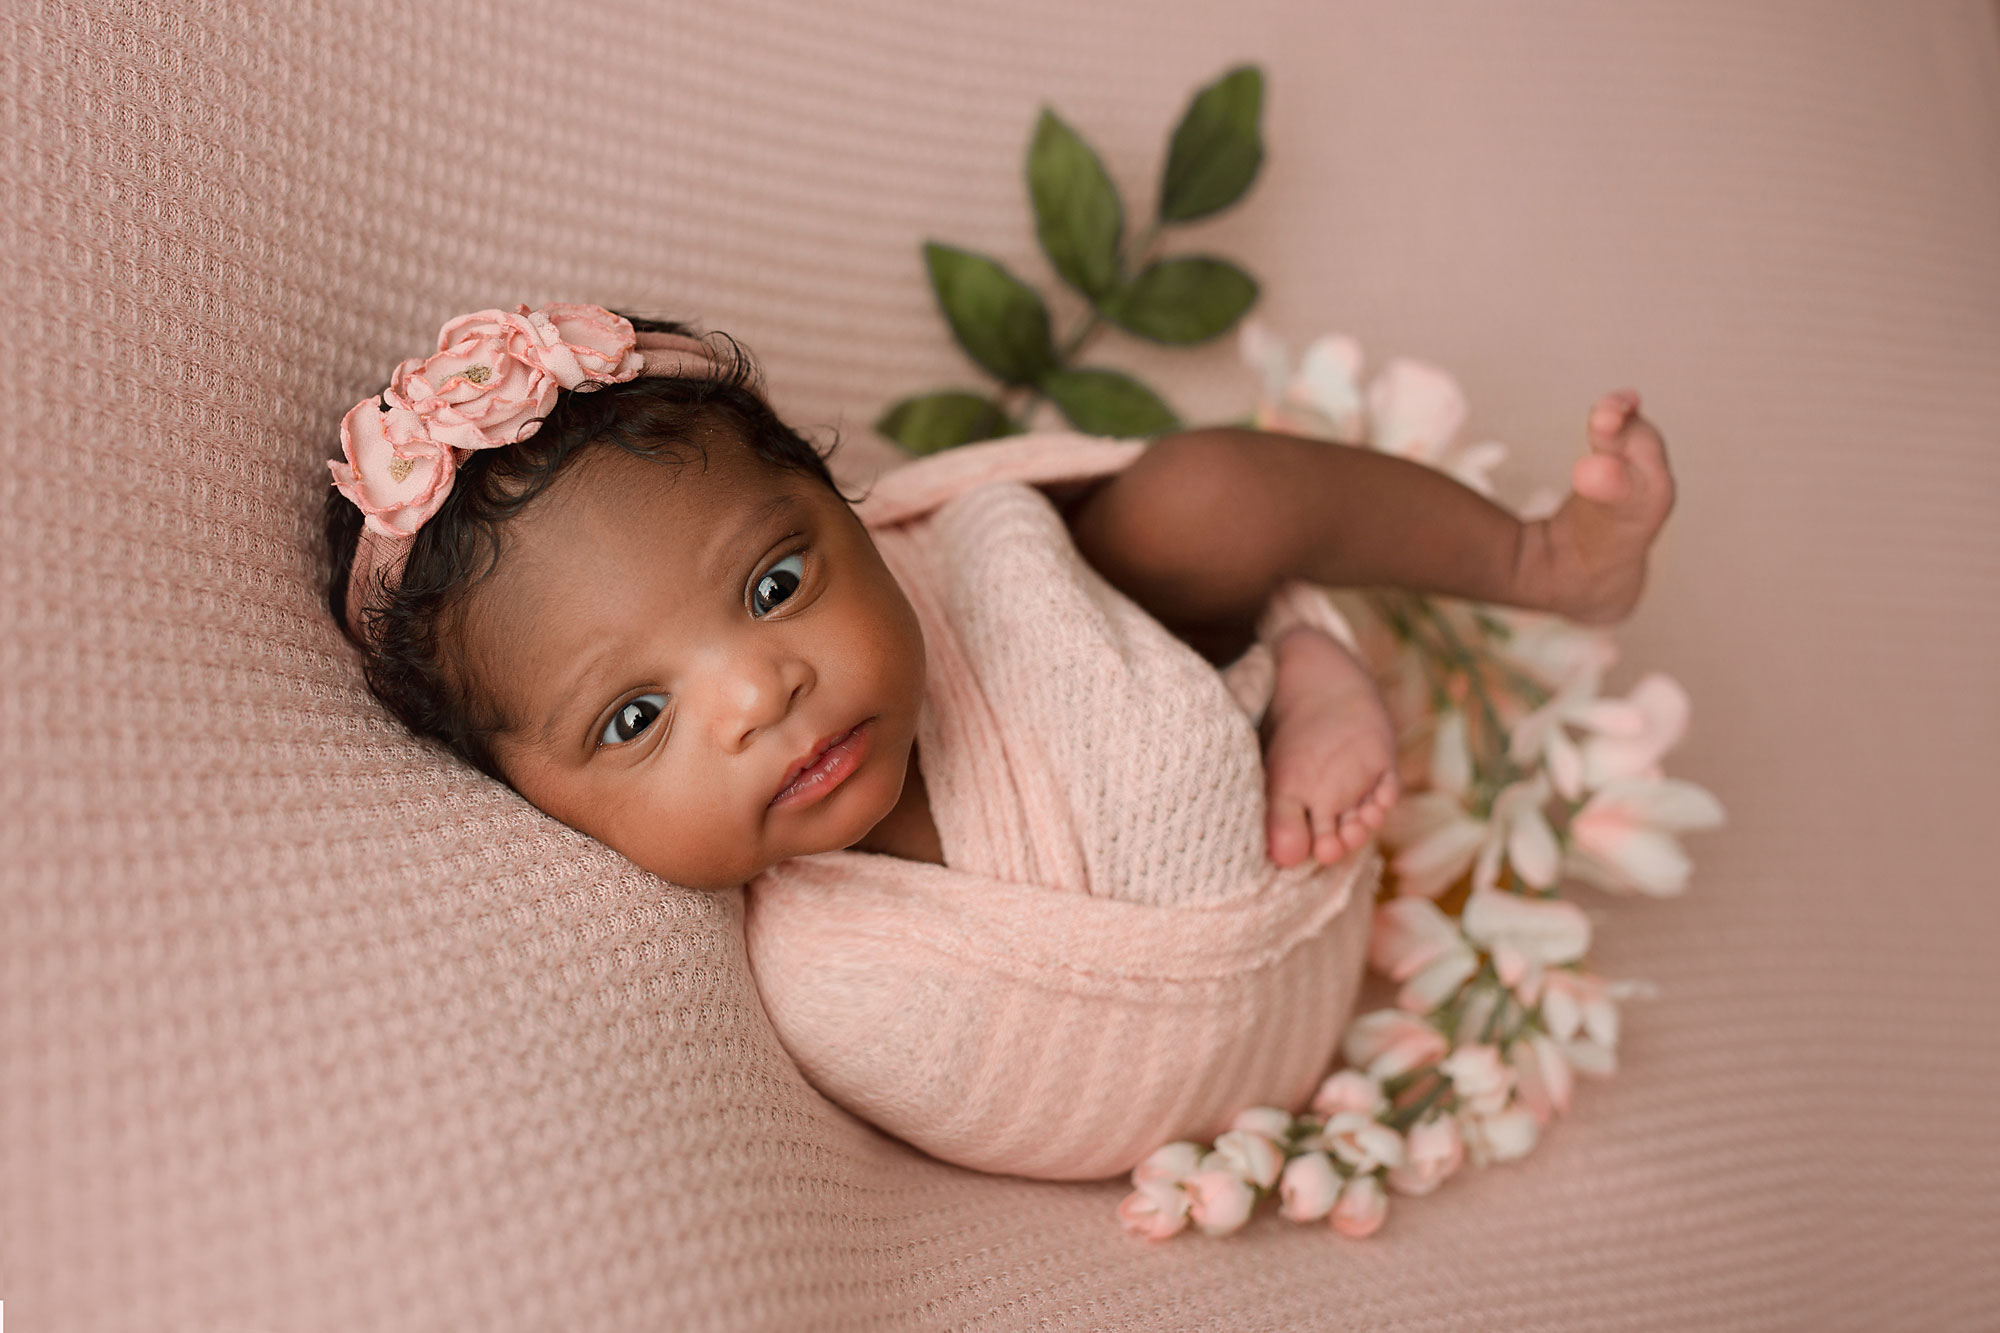 nj newborn photos showing a baby girl